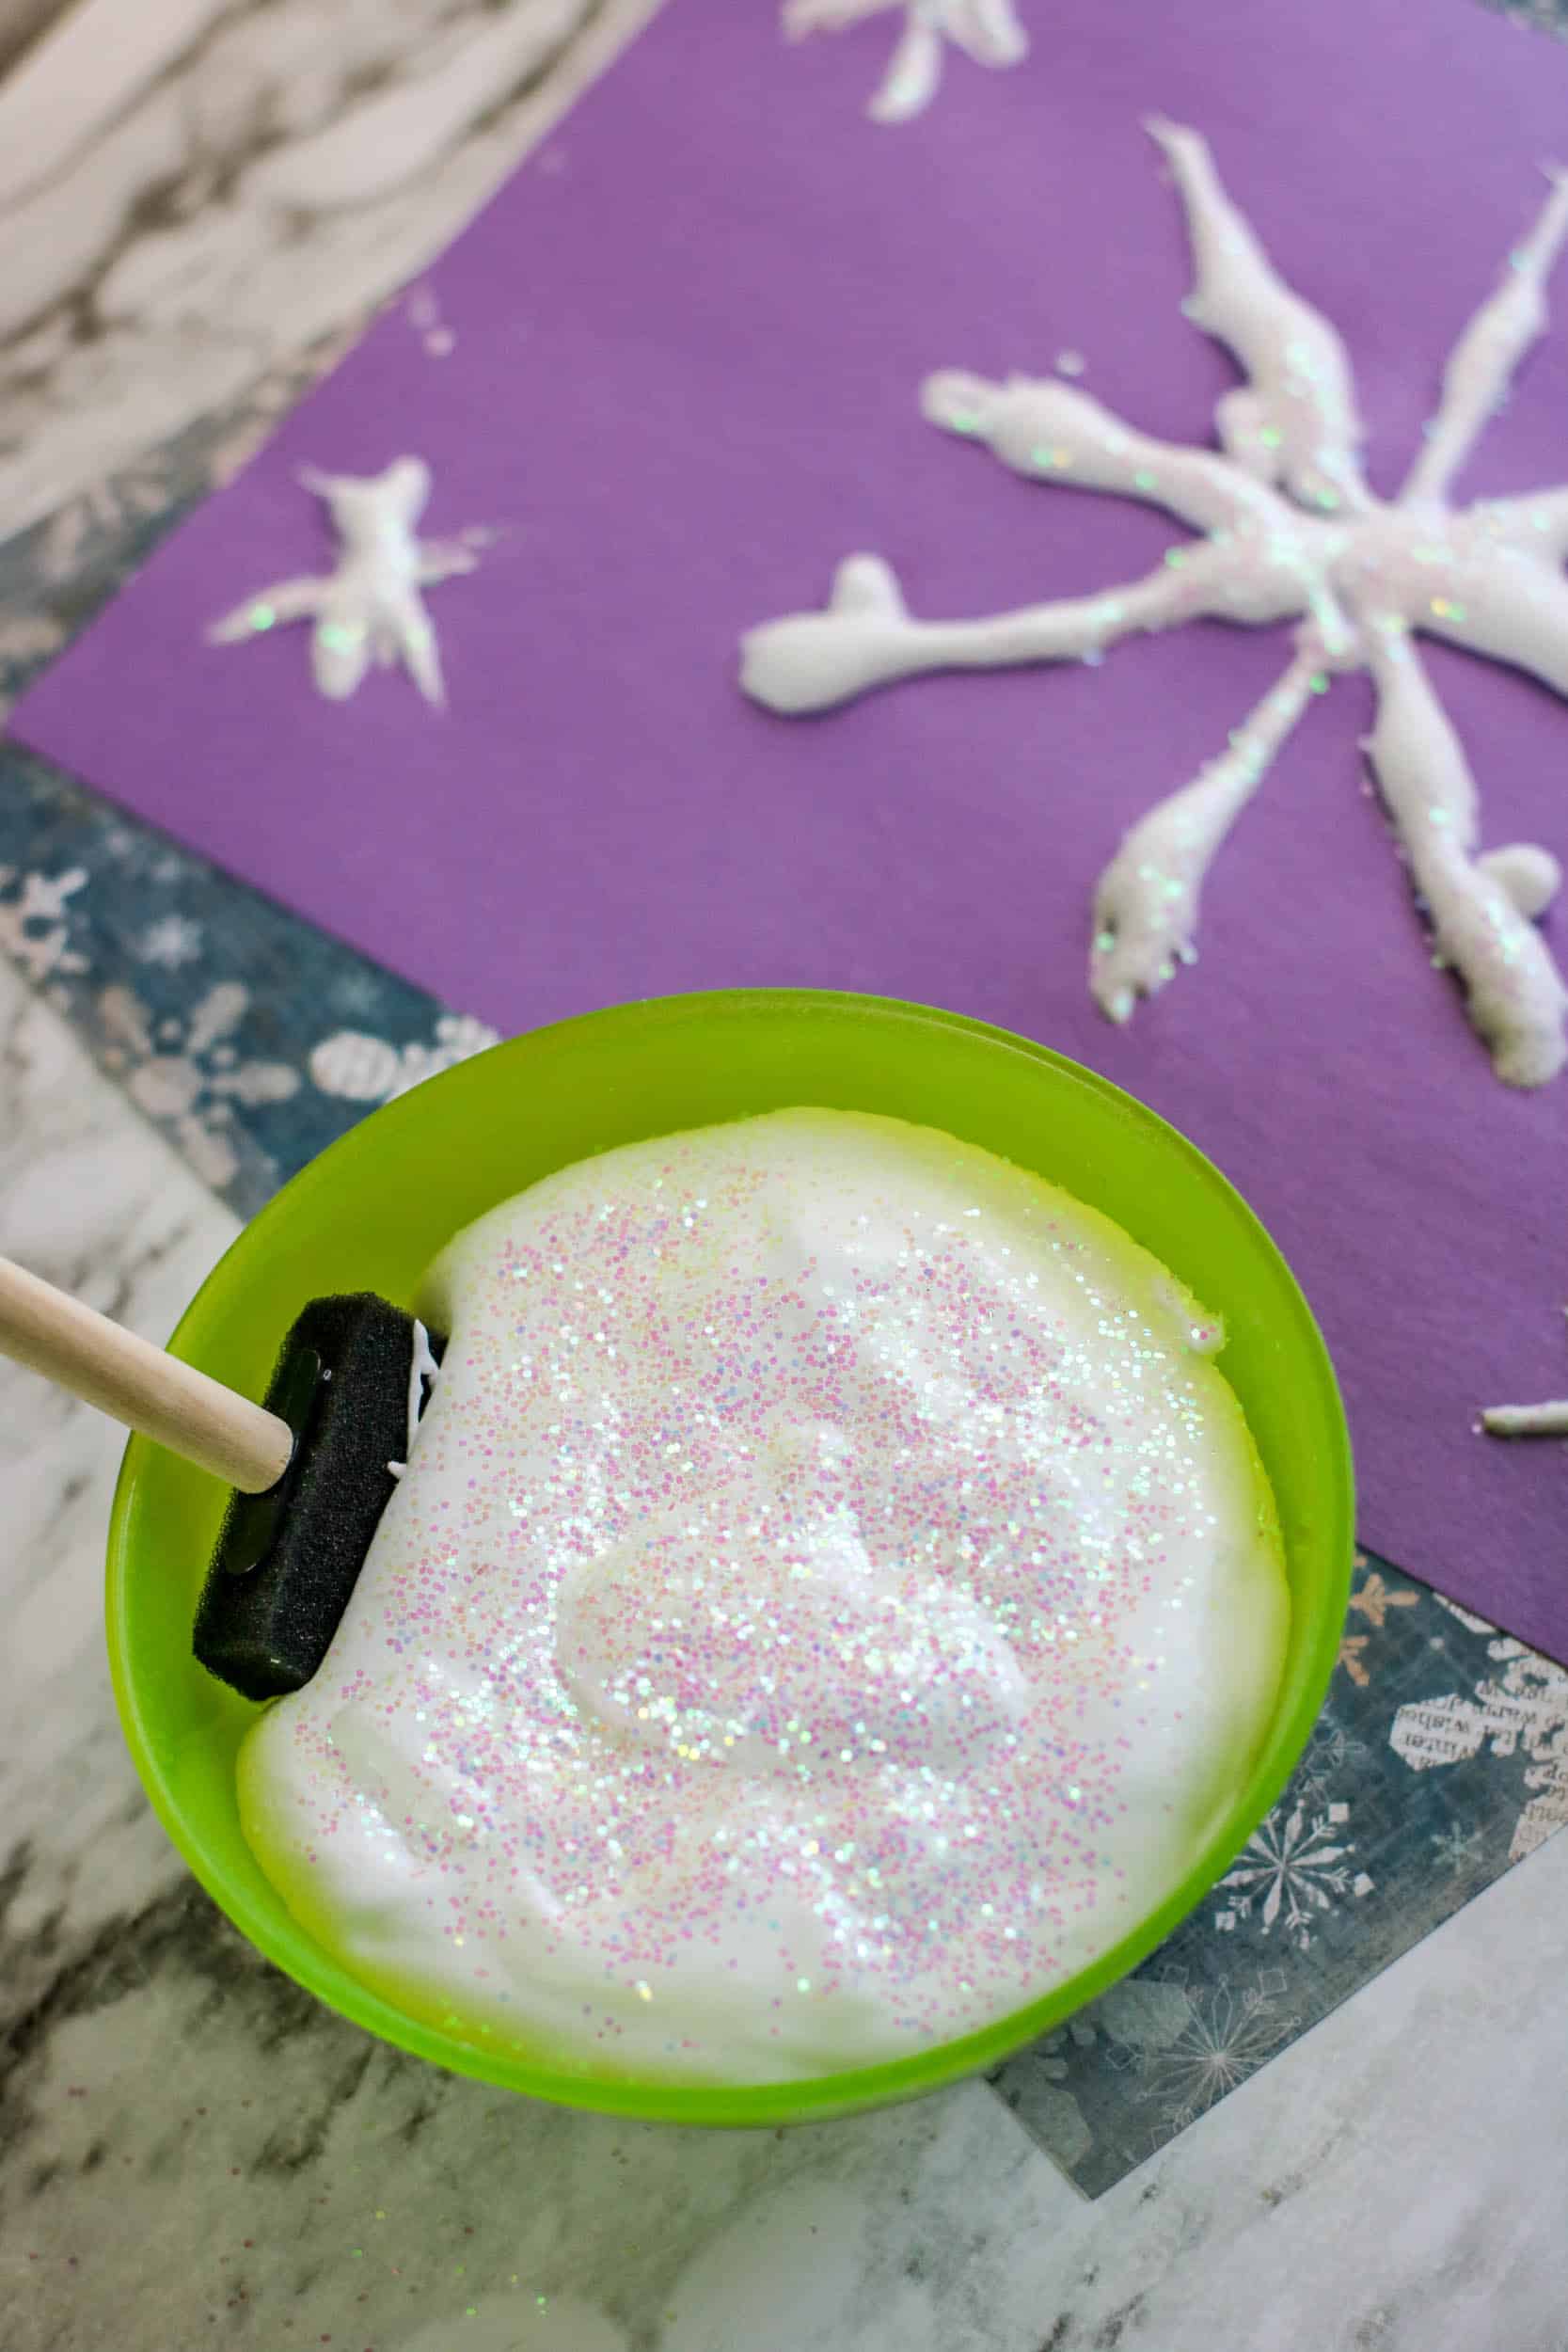 Homemade Glittery Snow Paint - Craftulate